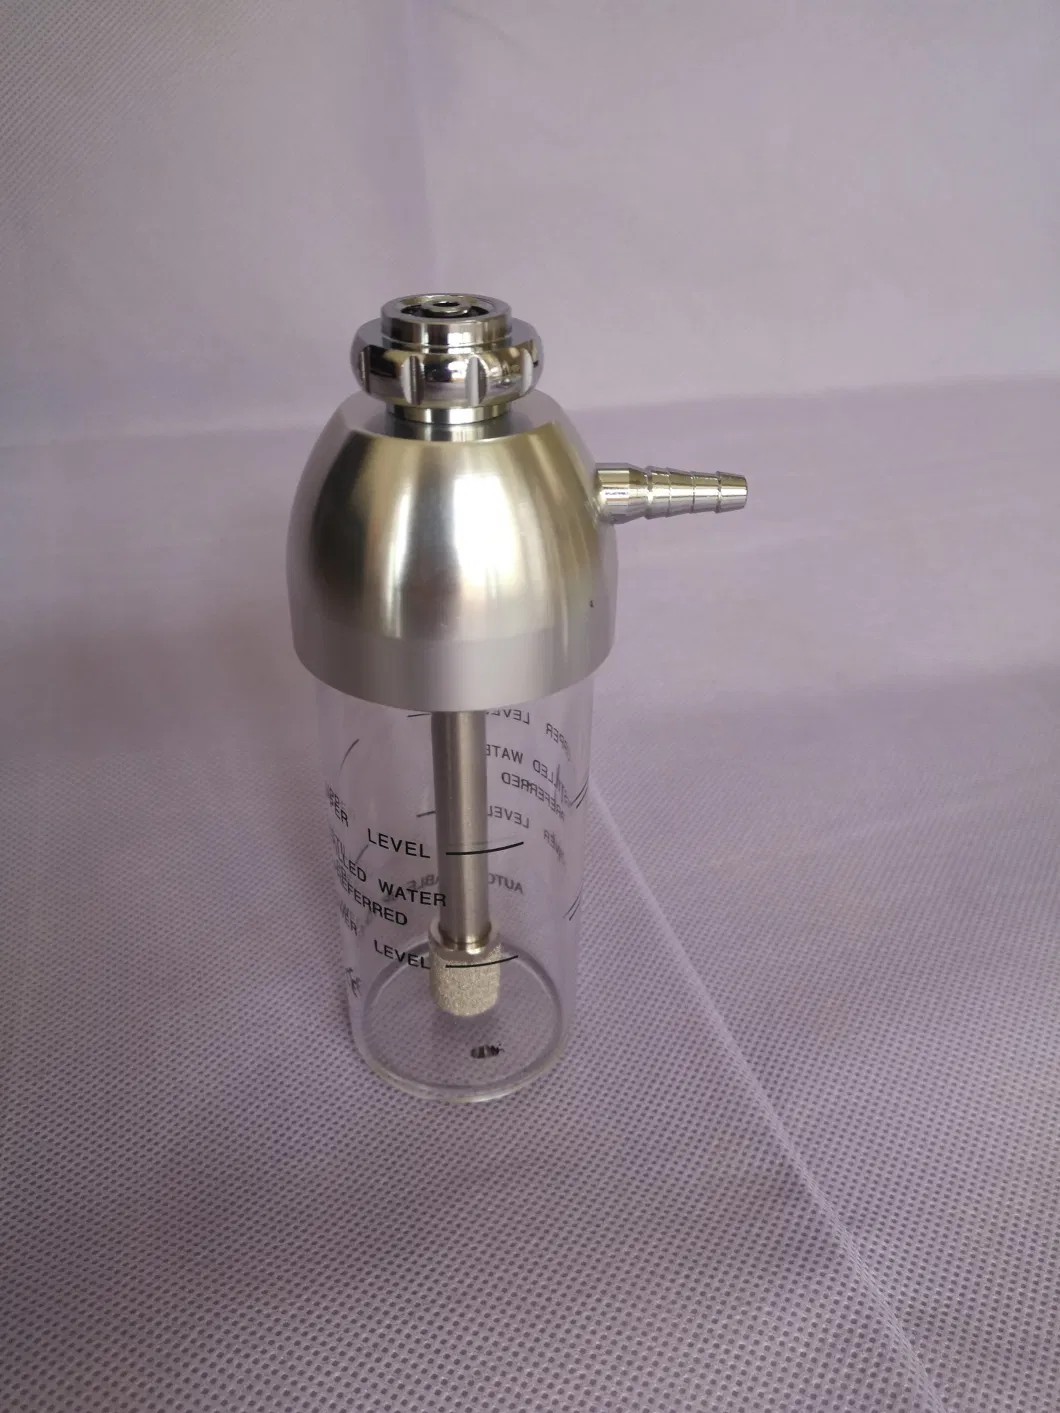 Lw-Flm-4 Medical Oxygen Flowmeter with Humidifier Bottle